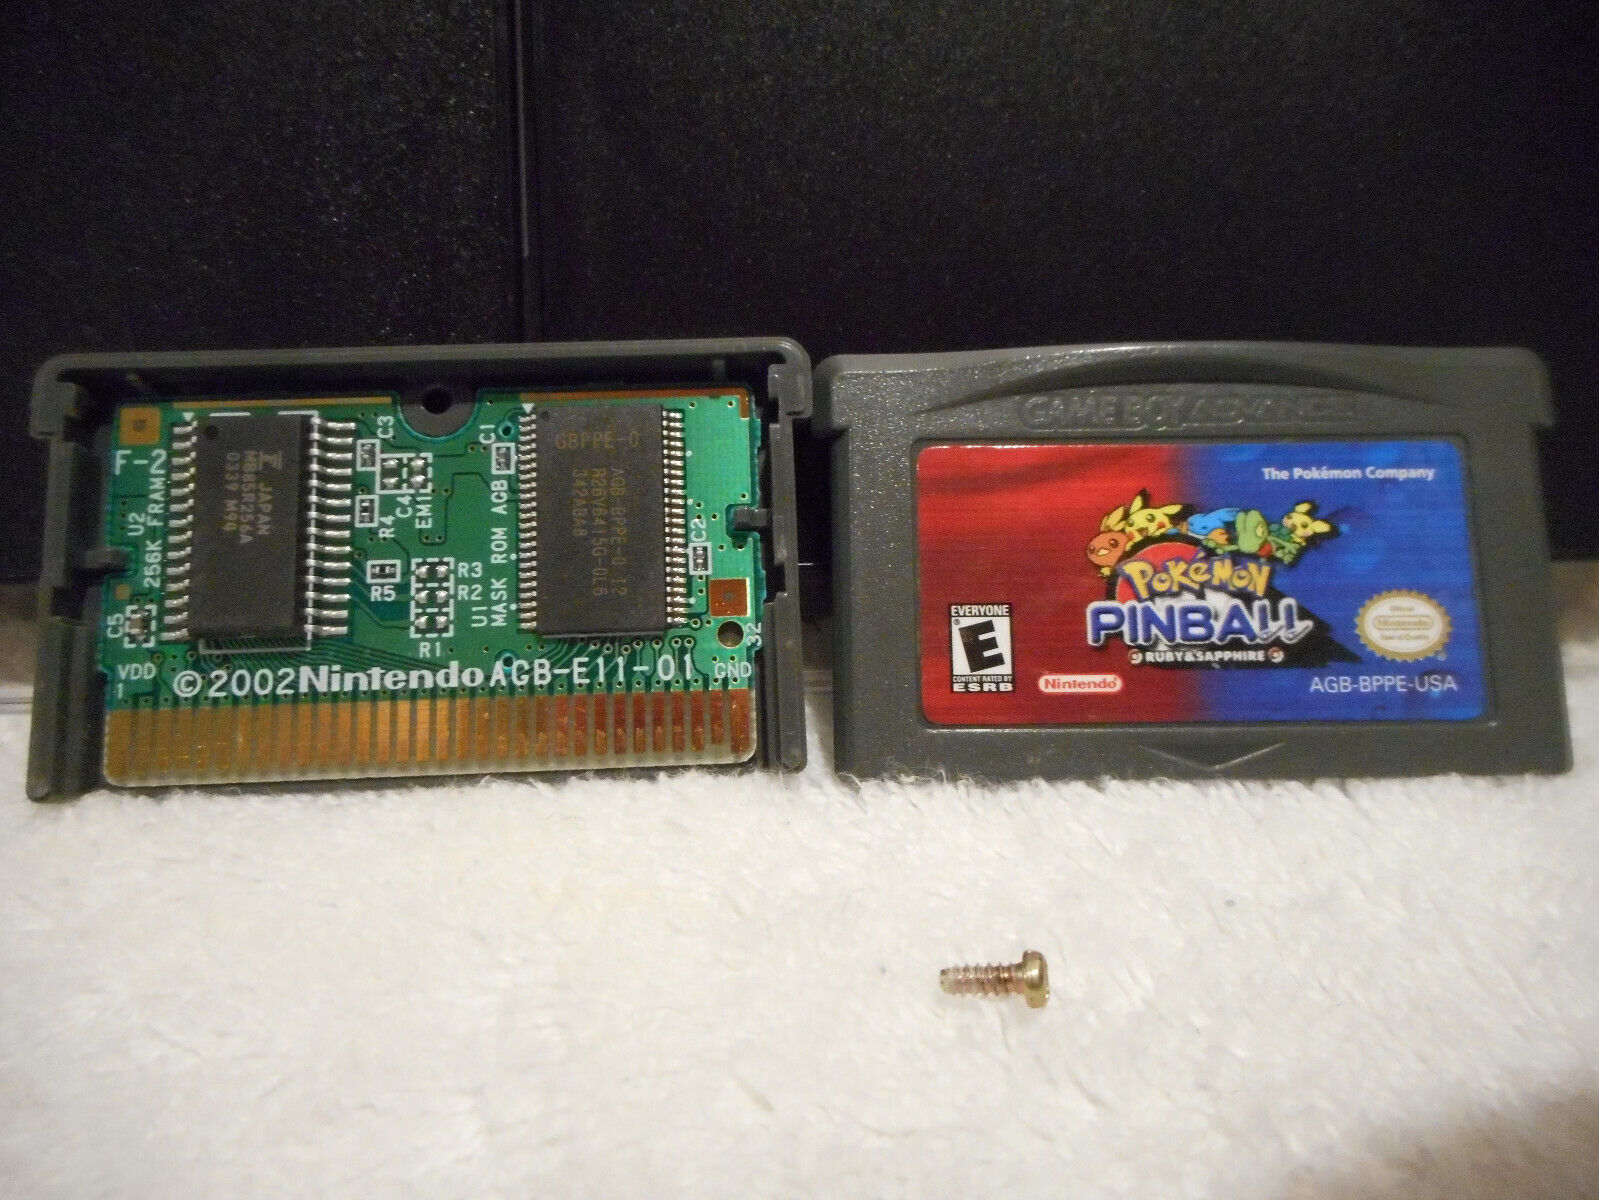 Pokmon Pinball: Ruby and Sapphire (Nintendo Game Boy Advance, 2003)